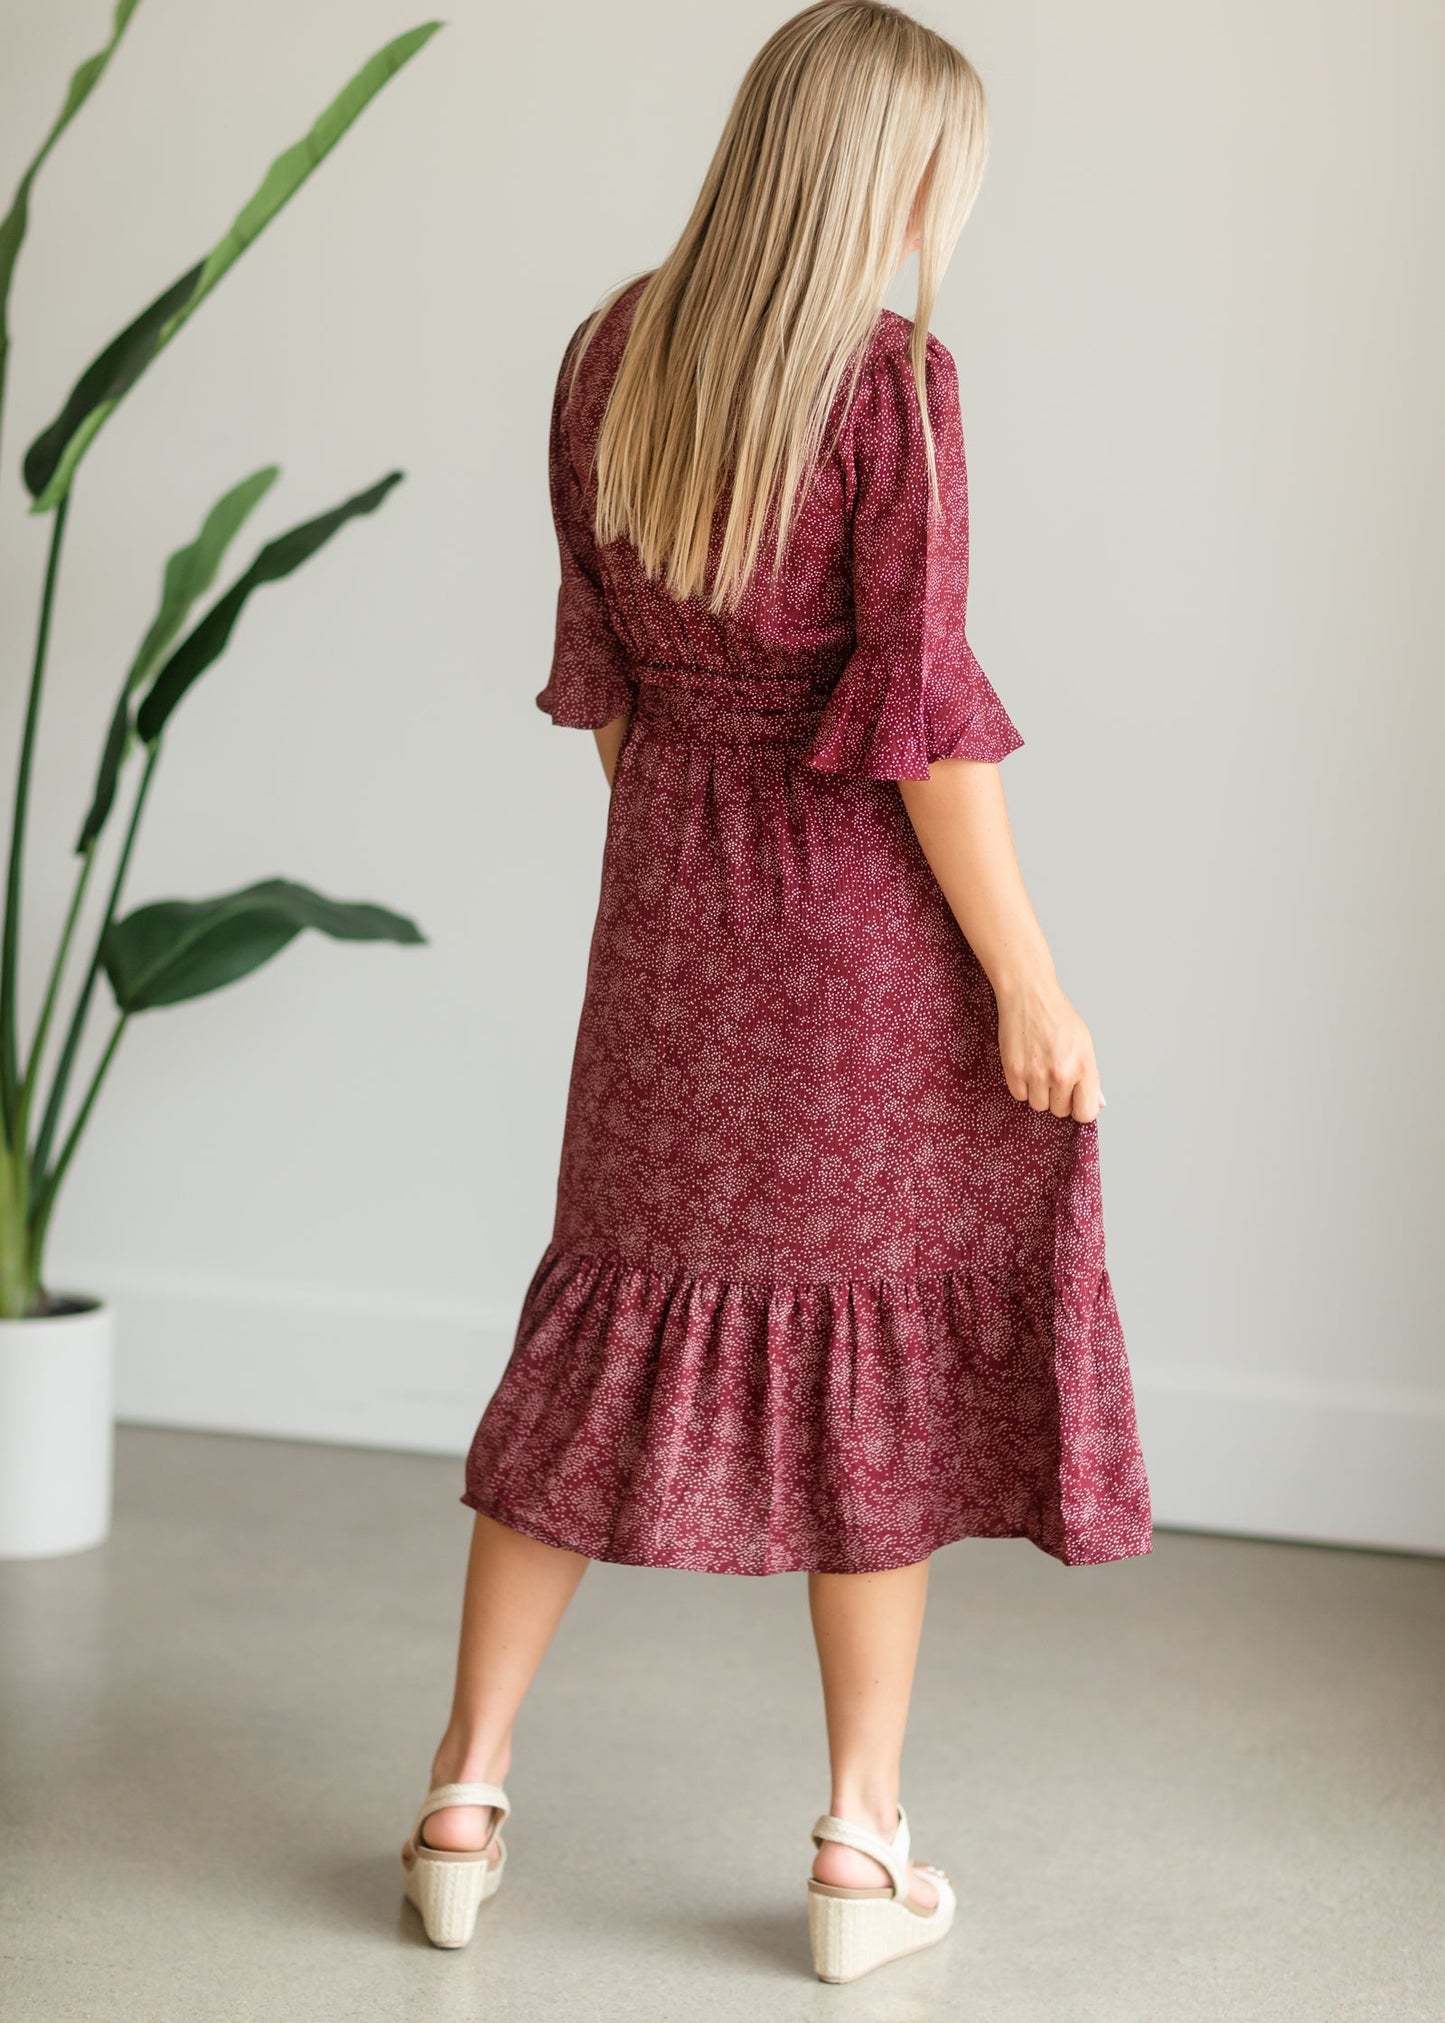 Burgundy Patterned Flouncy Midi Dress - FINAL SALE Dresses